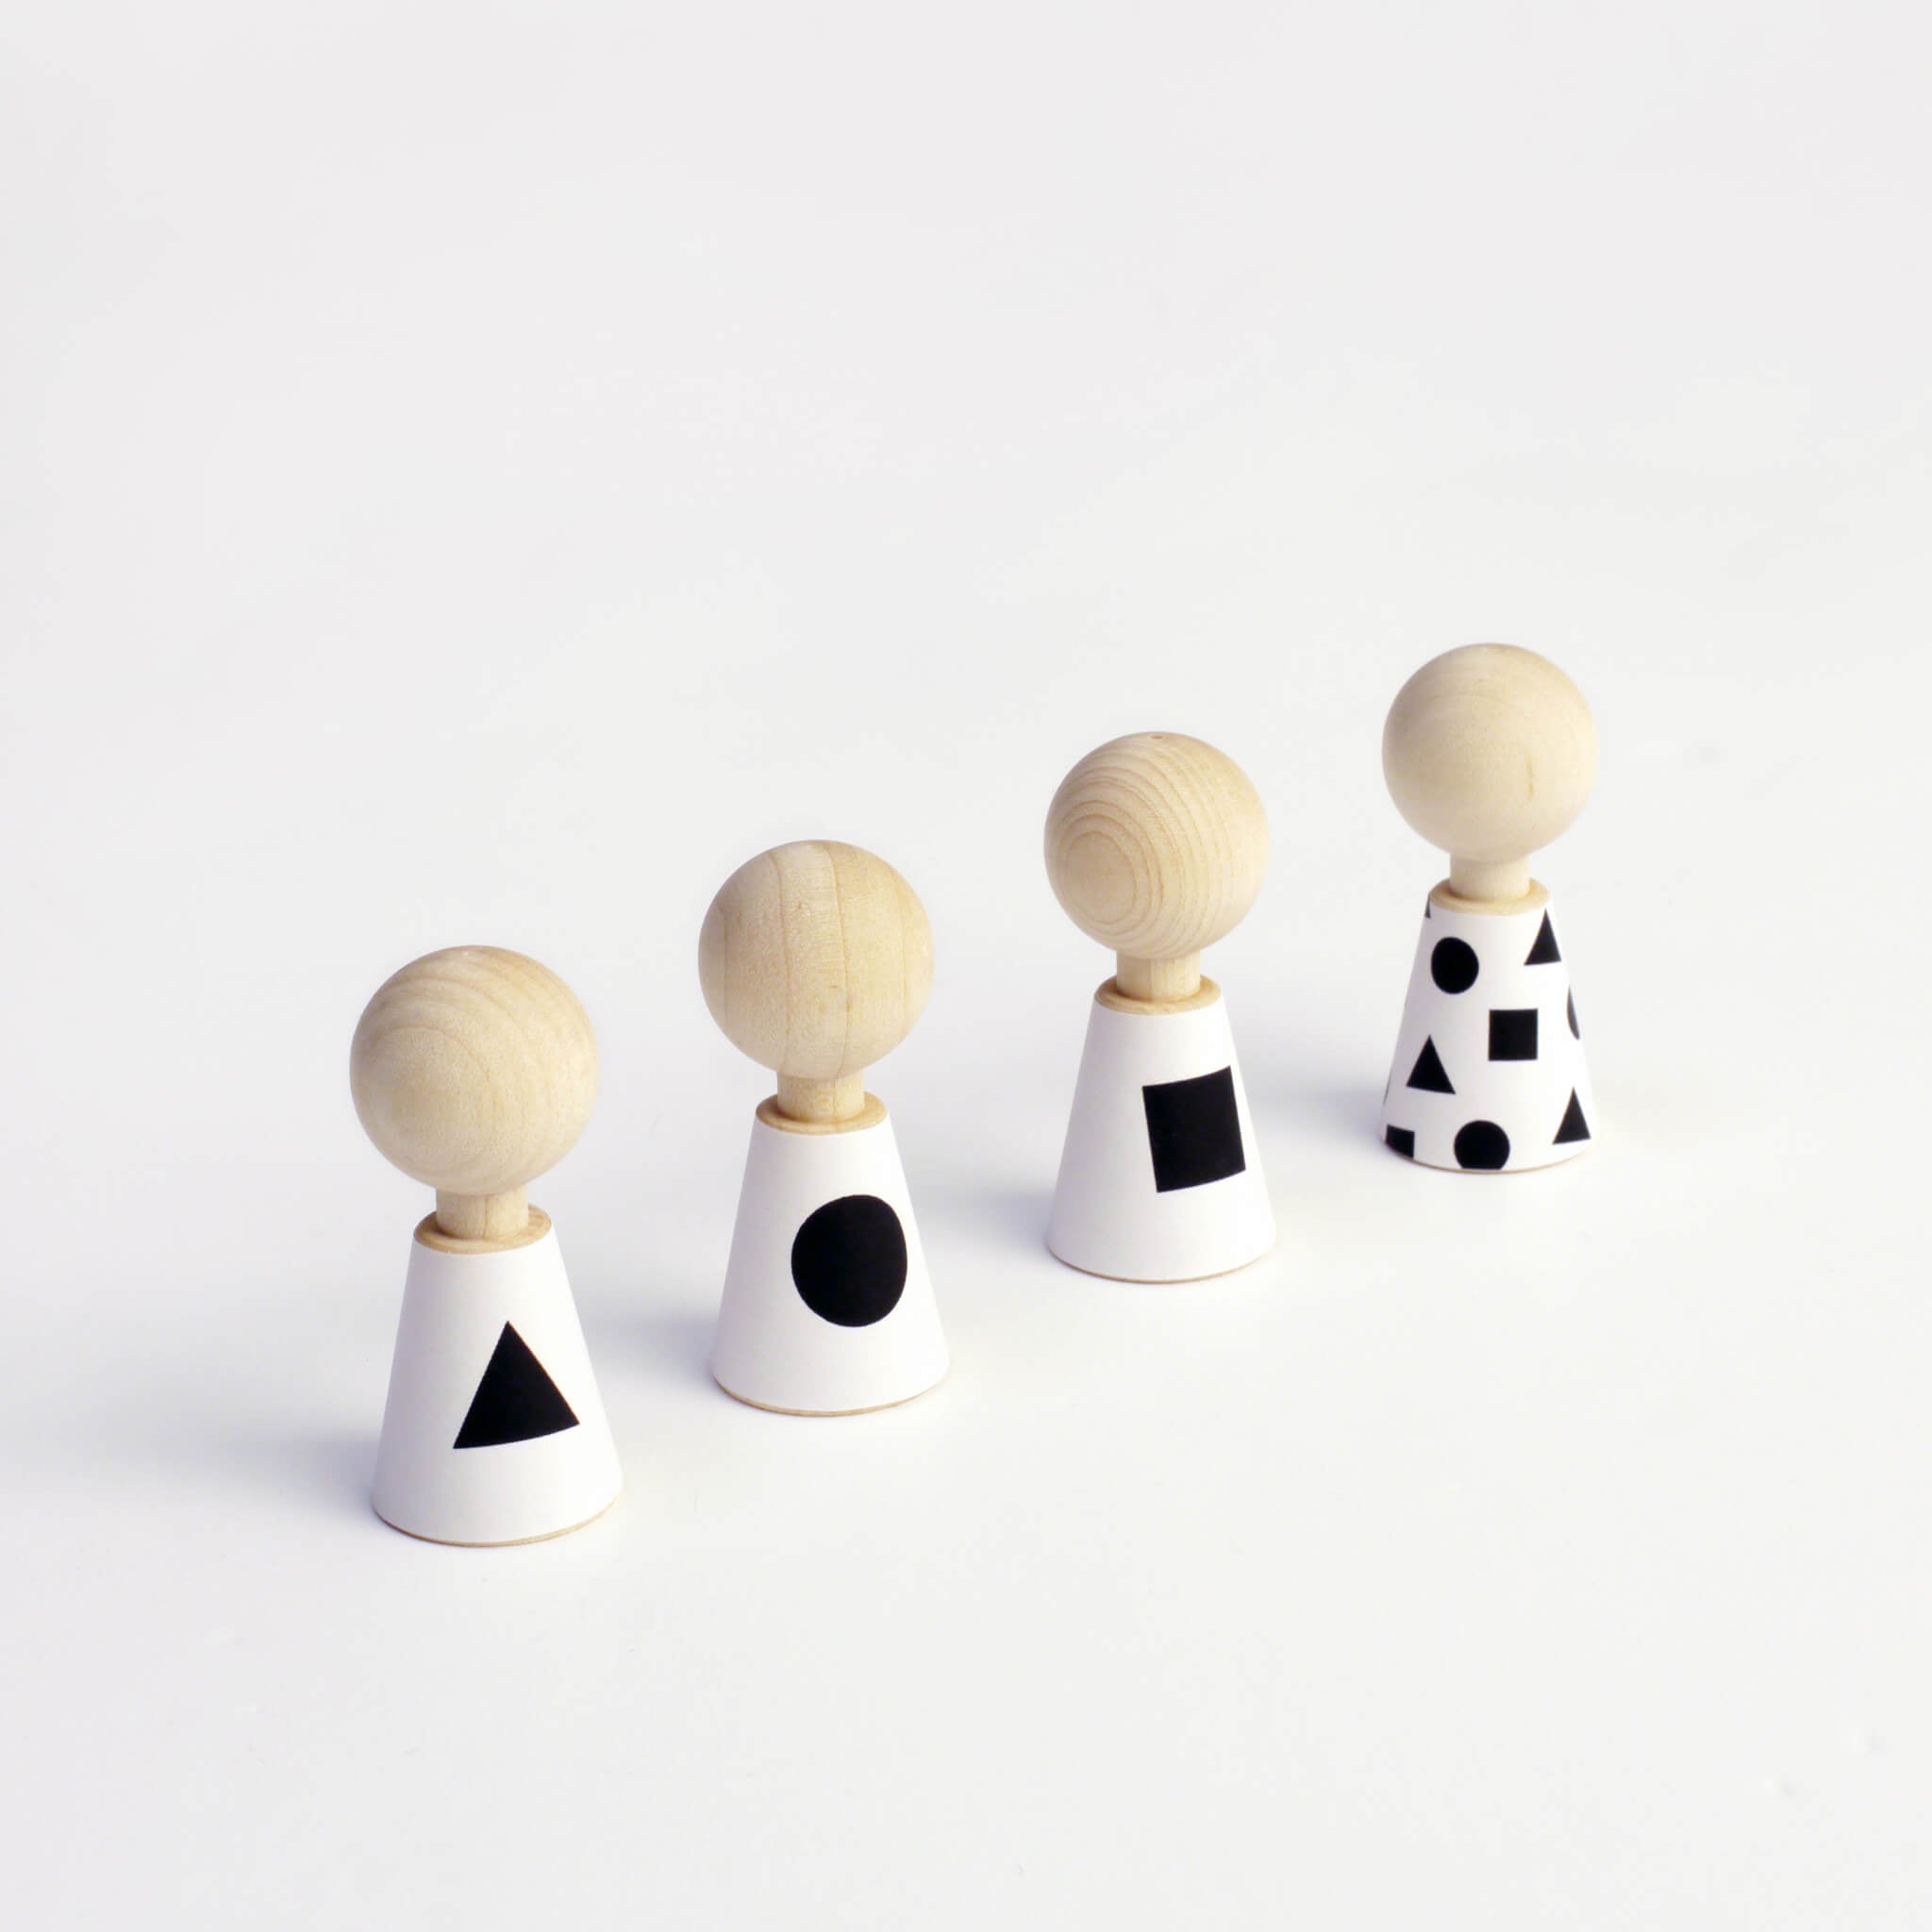 Five Wooden Dress Up Dolls - Modern Pebbles